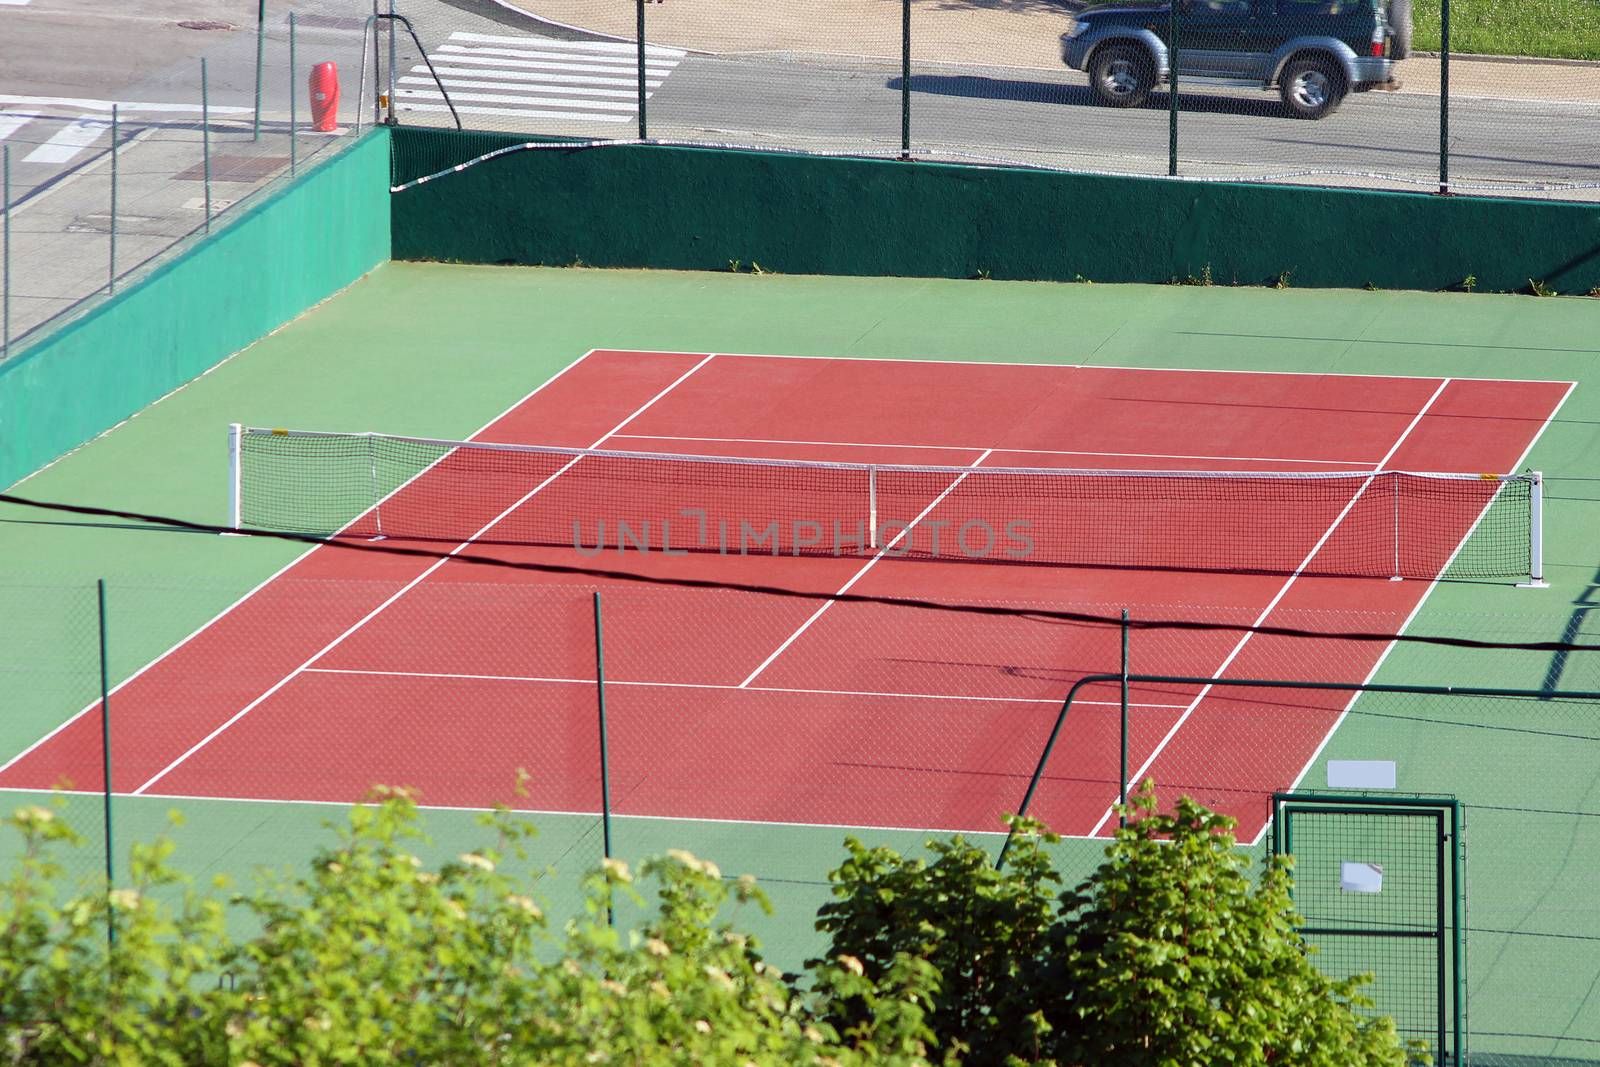 Outdoor tennis court with nobody
